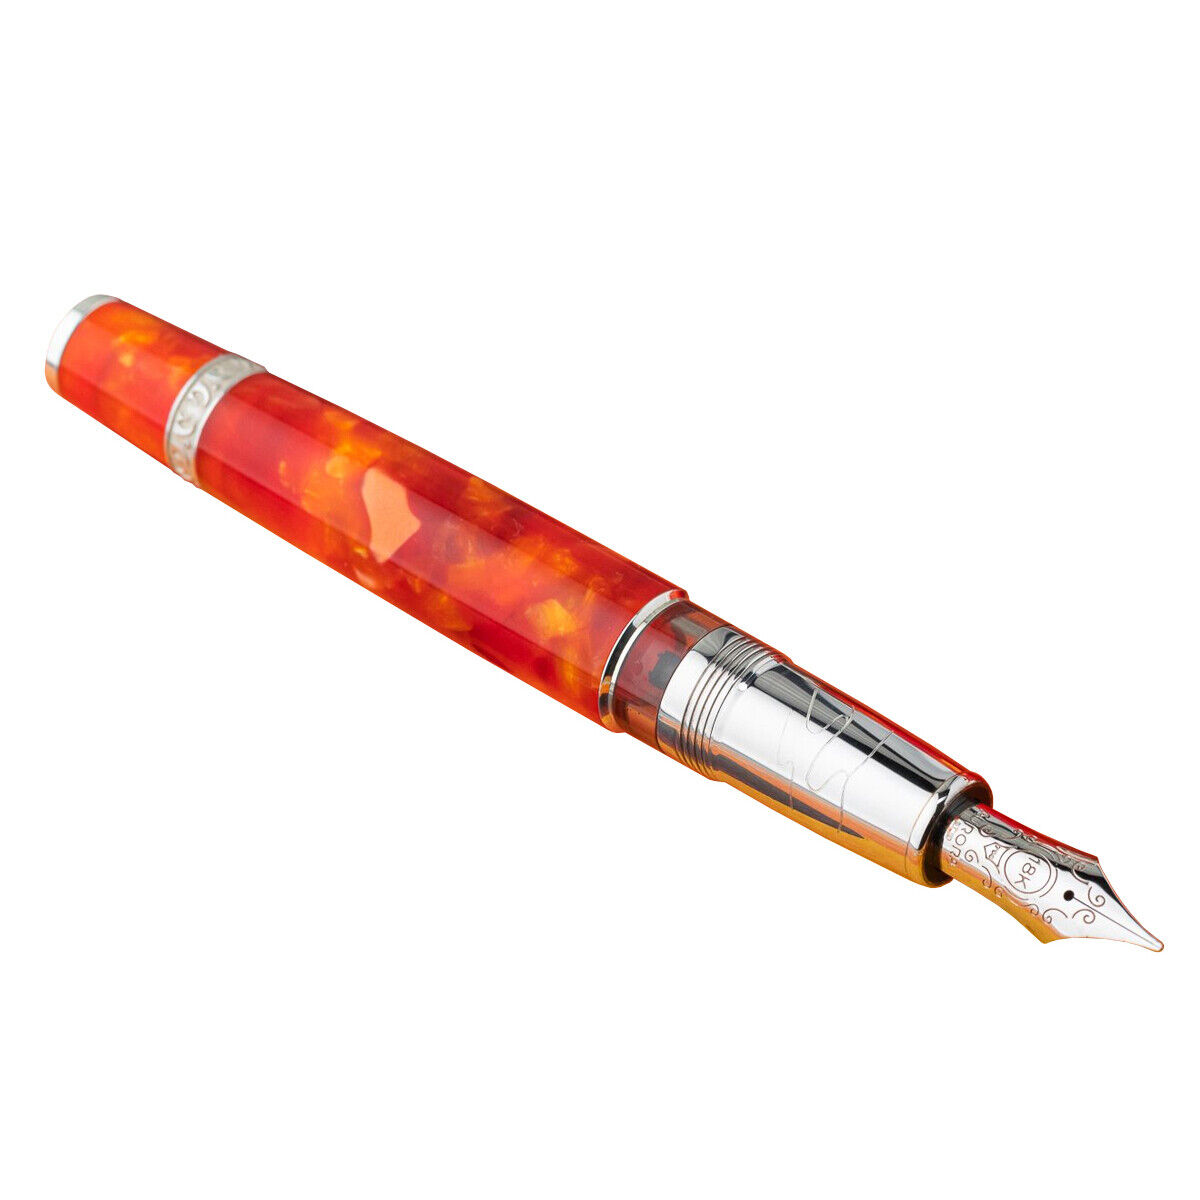 Aurora Fountain Pen Desert Limited edition F nib ambienti orange made in italy